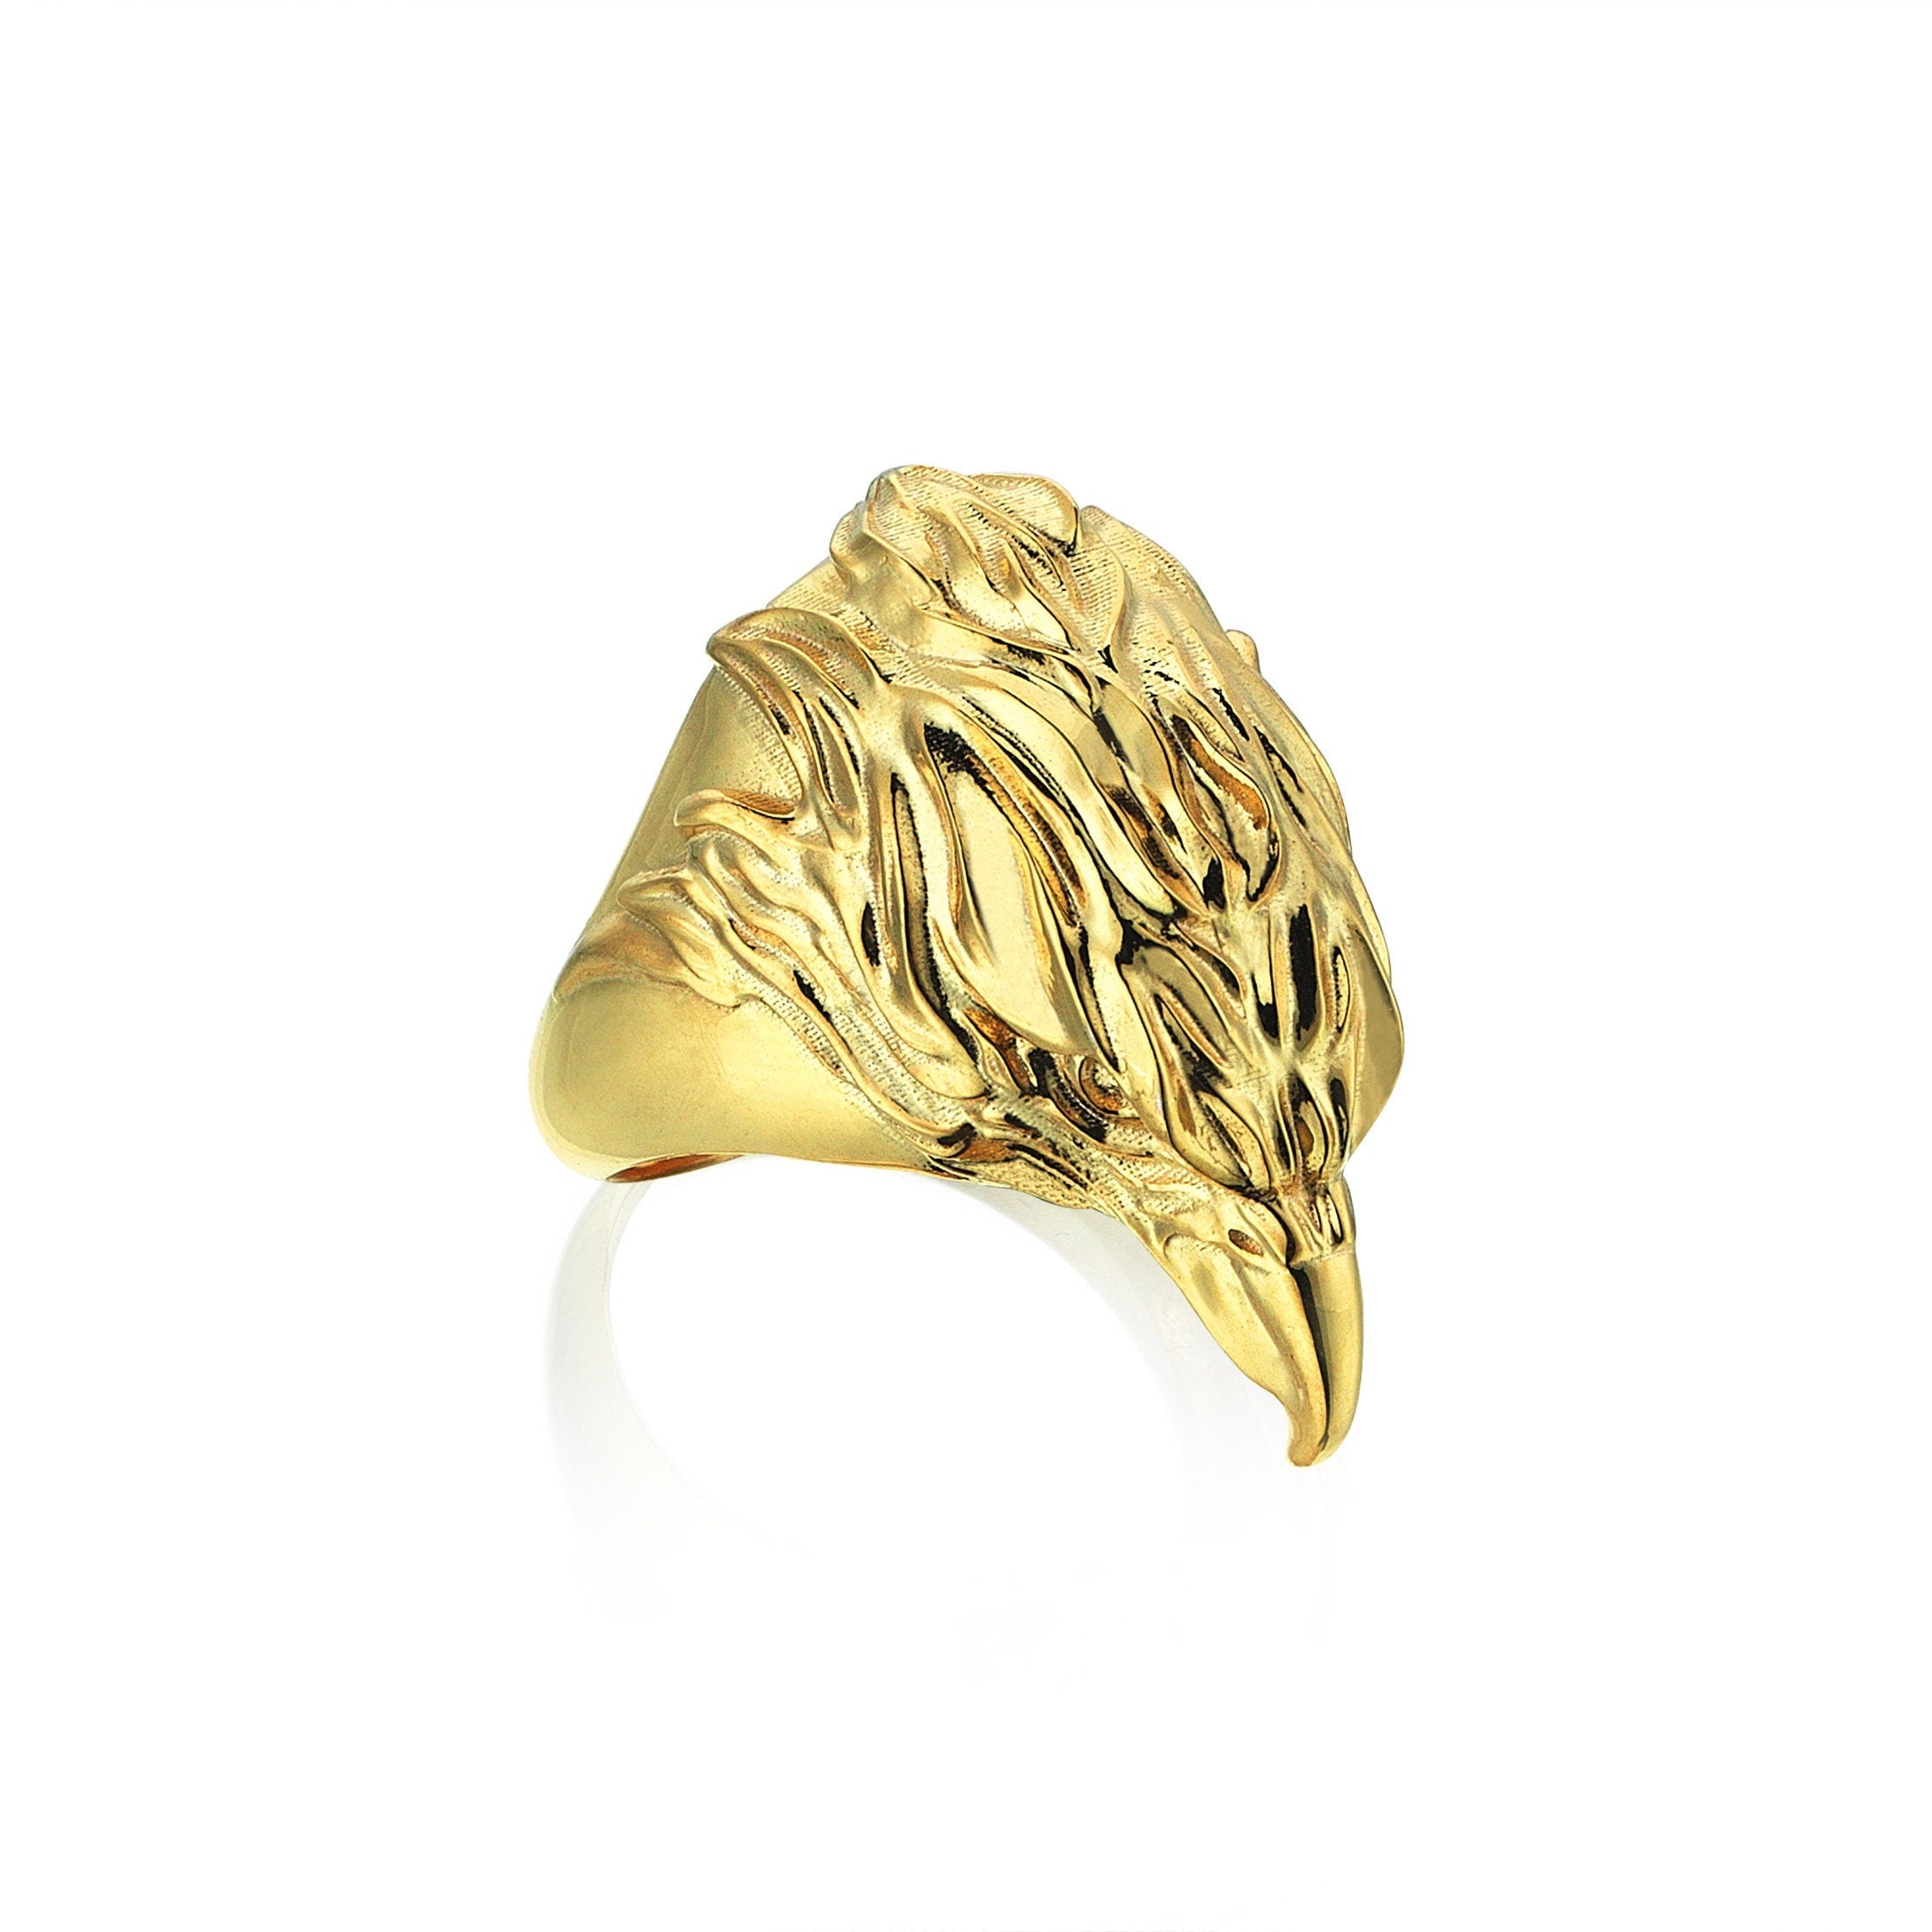 Milgrain Golden American Eagle Ring in Solid White Gold | Takar Jewelry